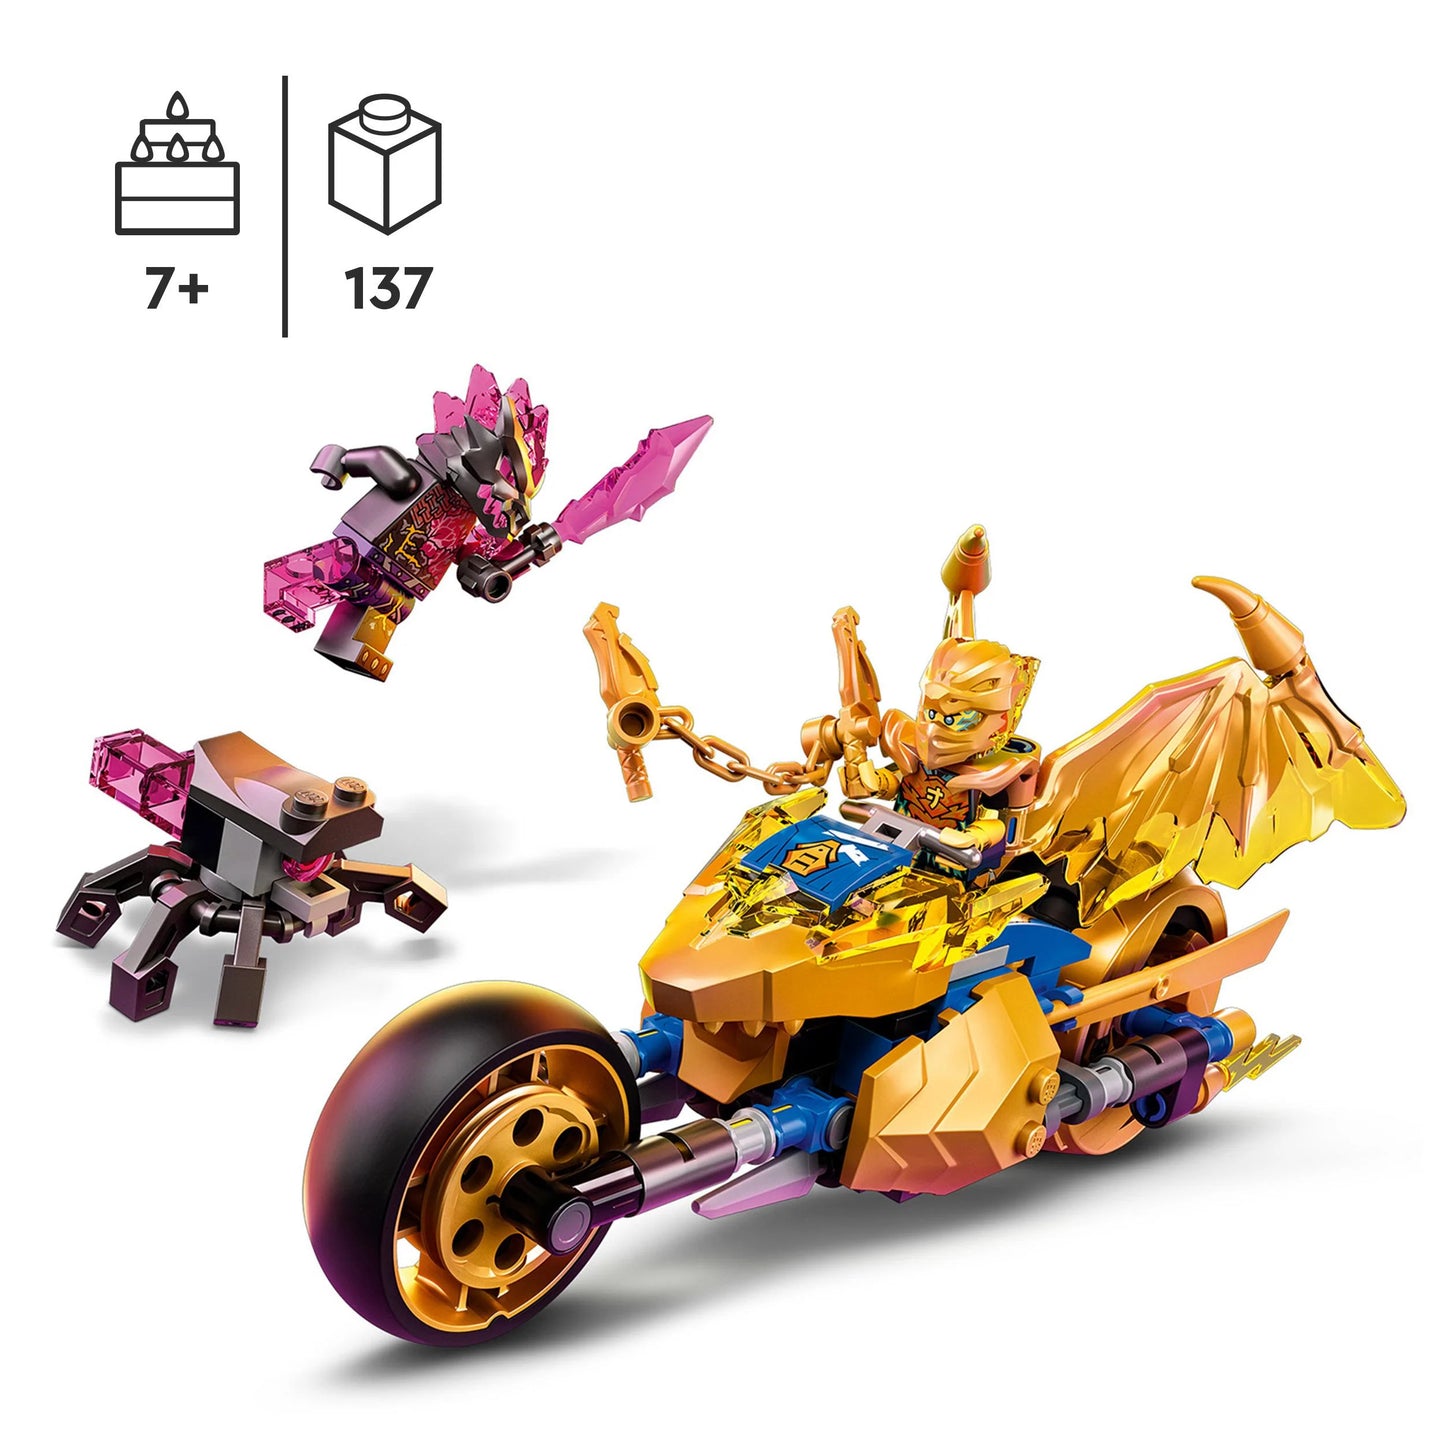 Jay's Golden Dragon Bike - LEGO Ninjago